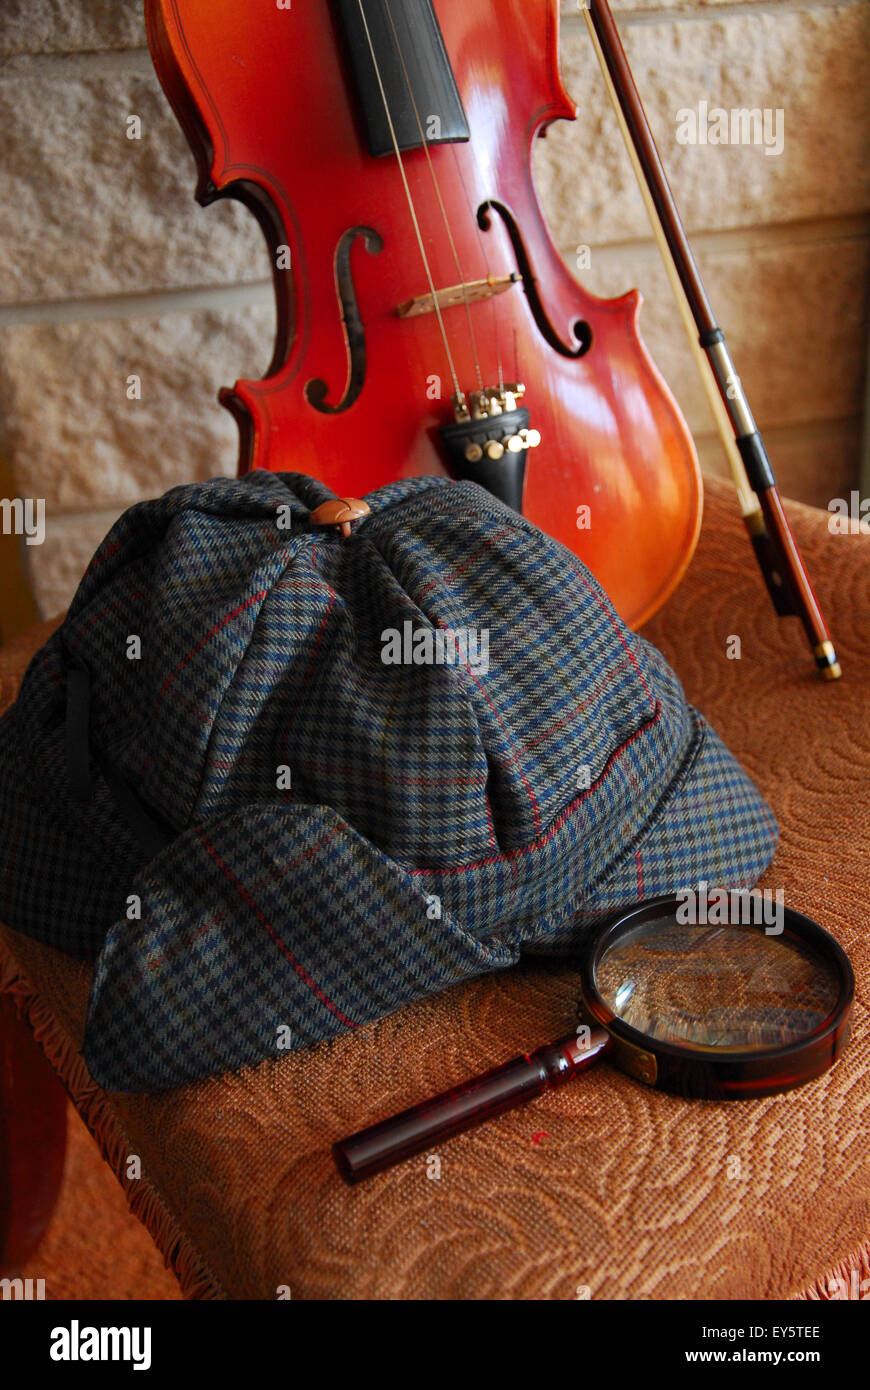 A deerstalker hat, a magnifying glass and a violin set a 'Sherlockian' scene Stock Photo